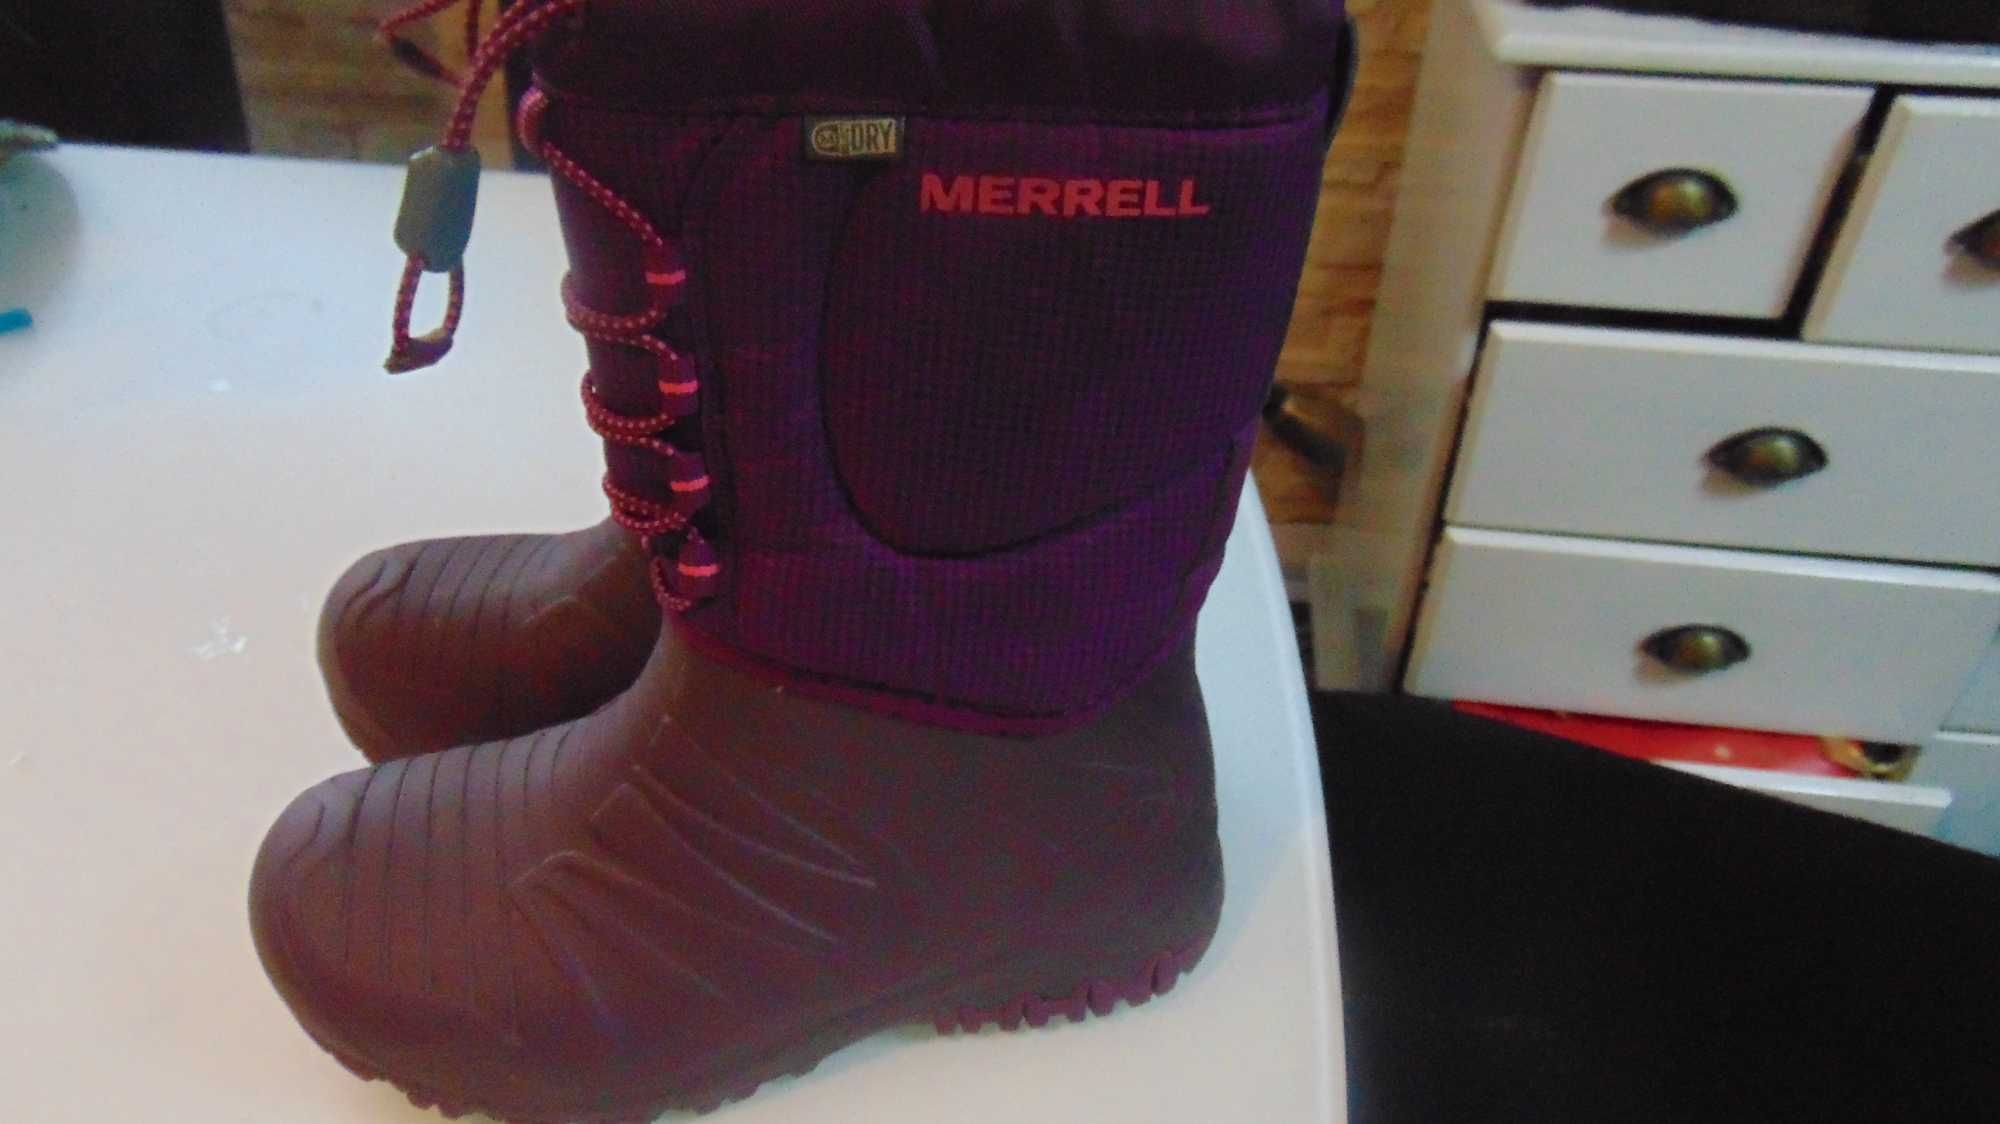 merrell select DRY thermolite roz uk1 eur 33 swietne sniegowce